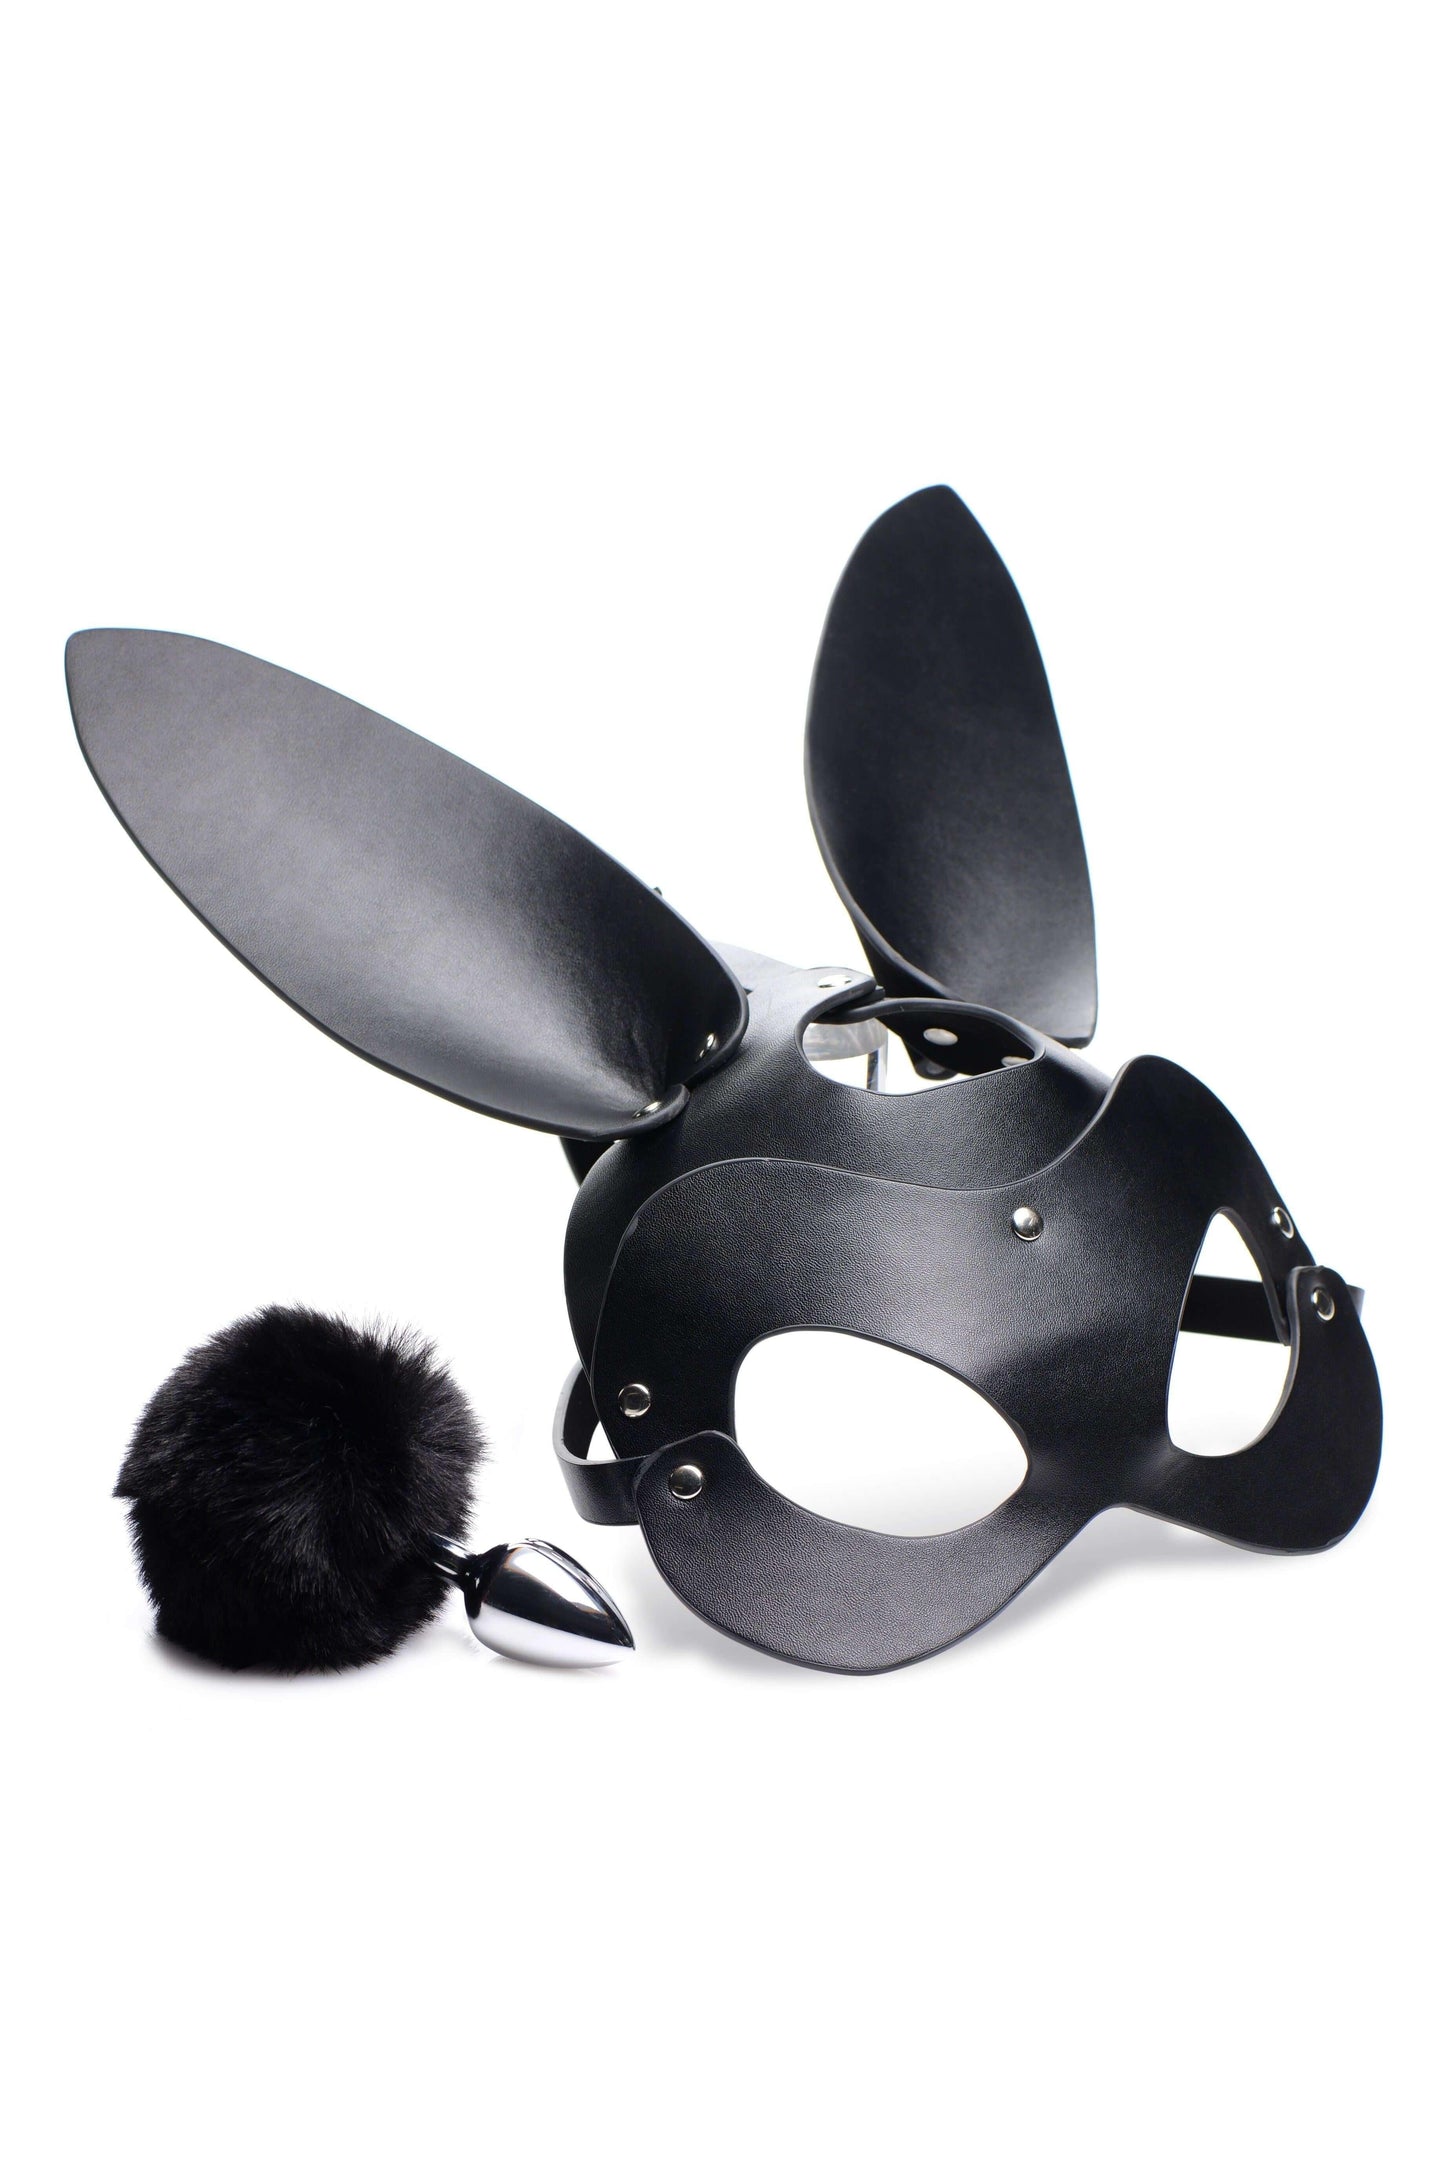 Bunny Tail Anal Plug and Mask Set - Take A Peek